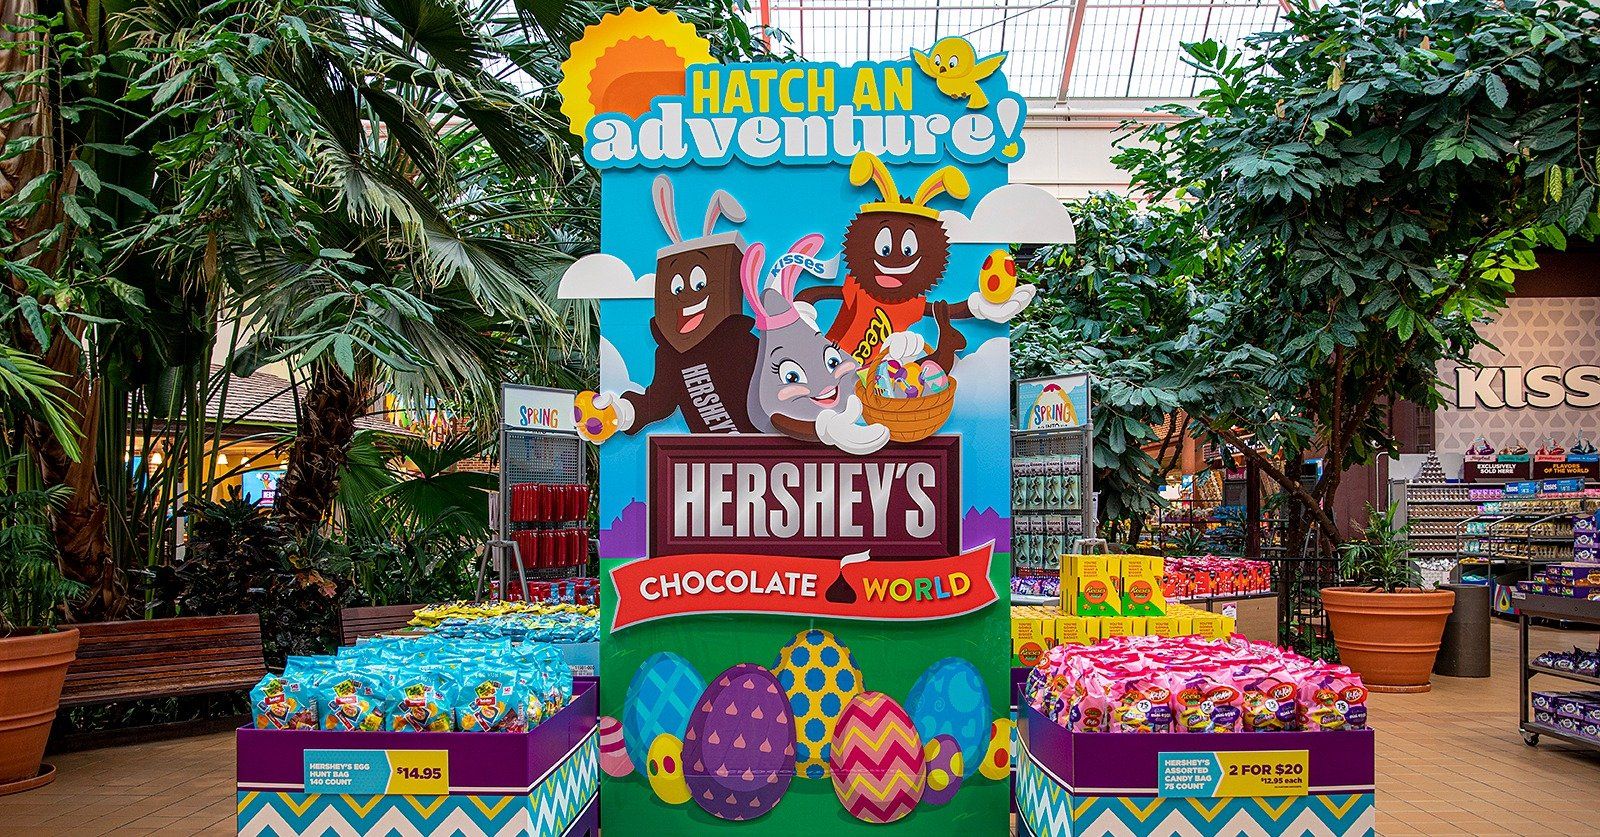 World’s Largest Chocolate Visitor Complex Hershey's Chocolate World